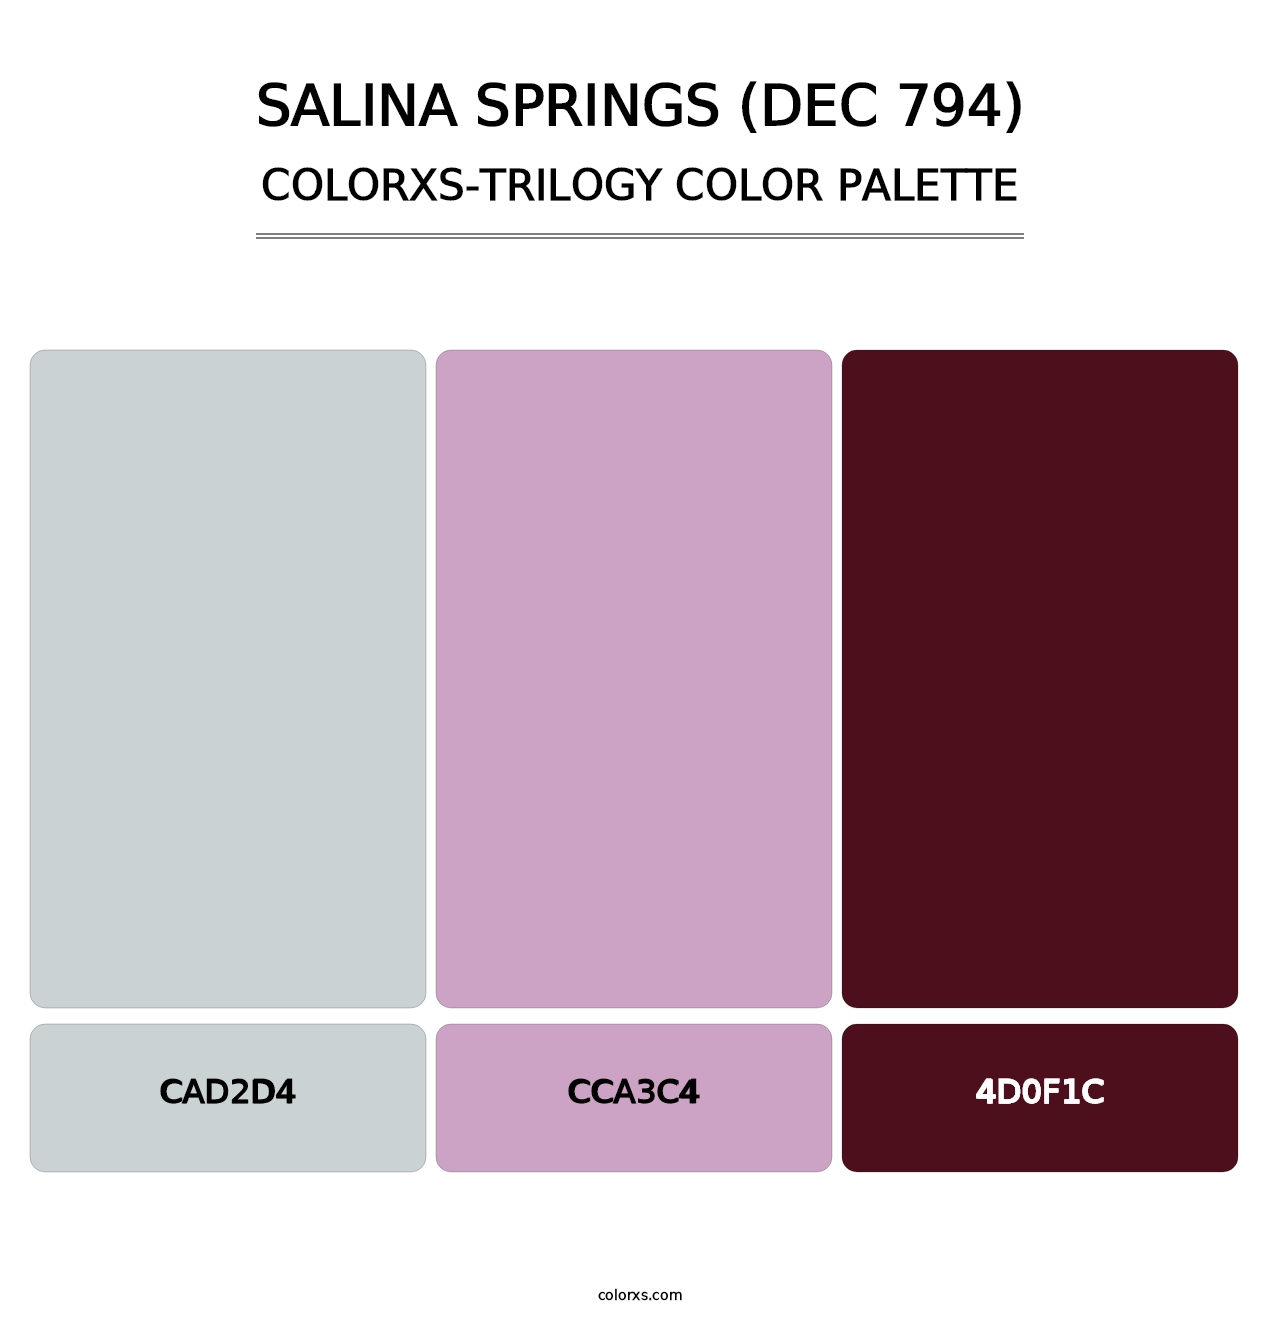 Salina Springs (DEC 794) - Colorxs Trilogy Palette